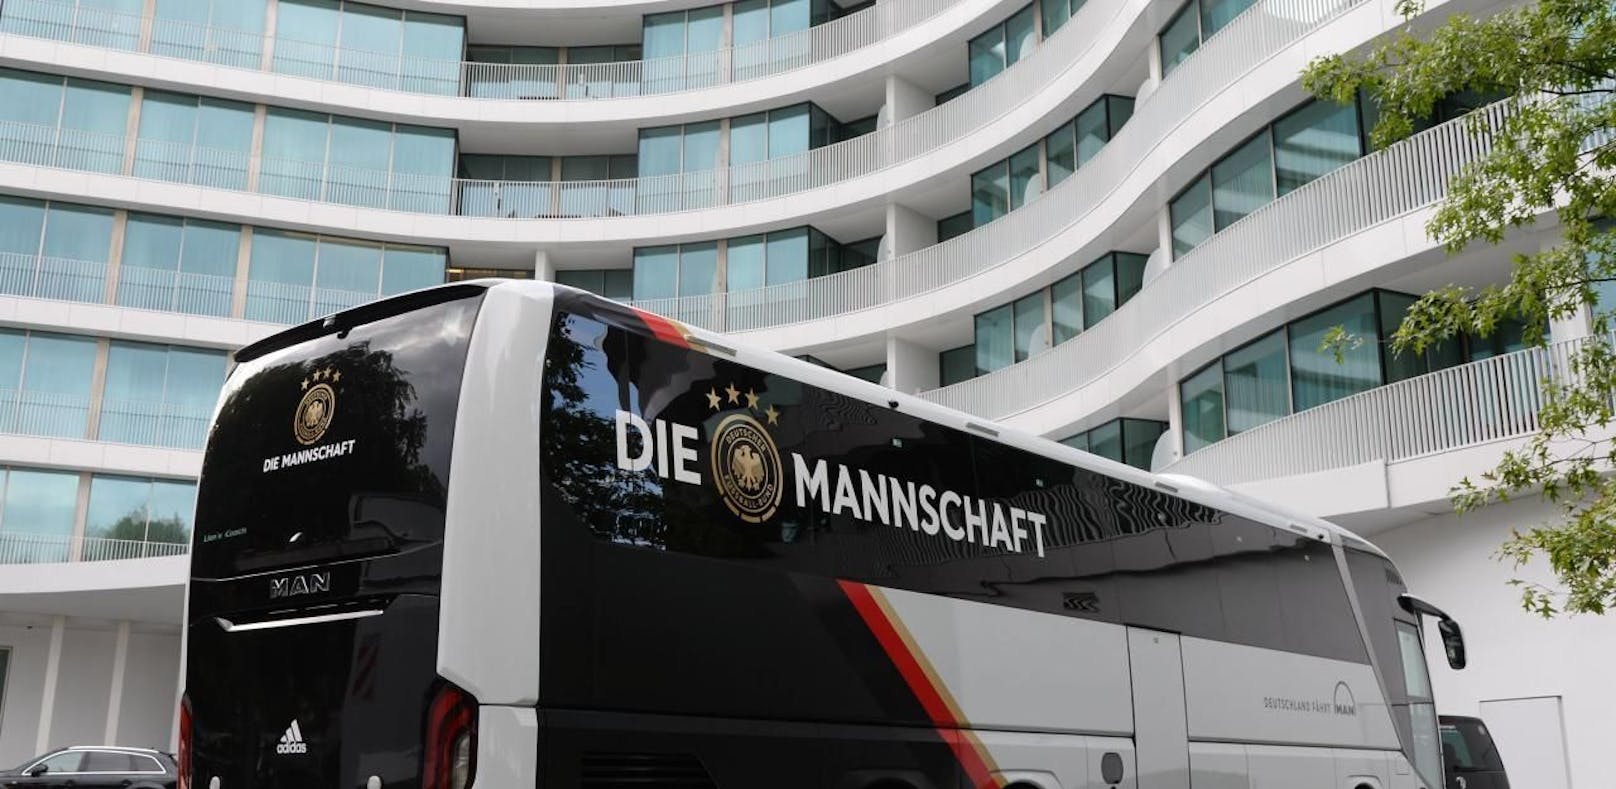 Der Mannschaftsbus des DFB vor dem Hotel